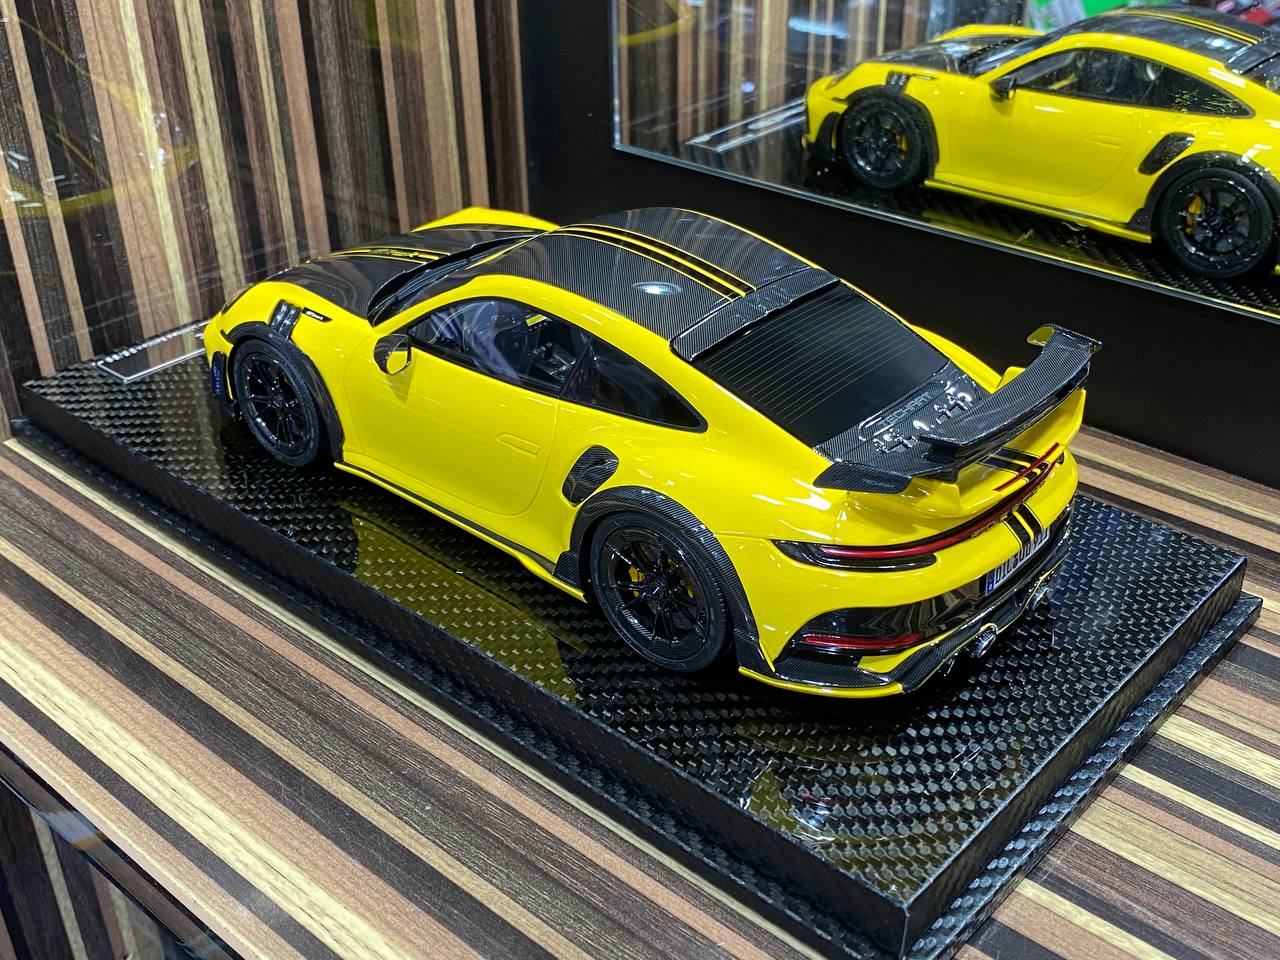 1/18 VIP Models Resin Model - Porsche 992 Turbo S GT Street R TechArt in Vibrant Yellow|Sold in Dturman.com Dubai UAE.